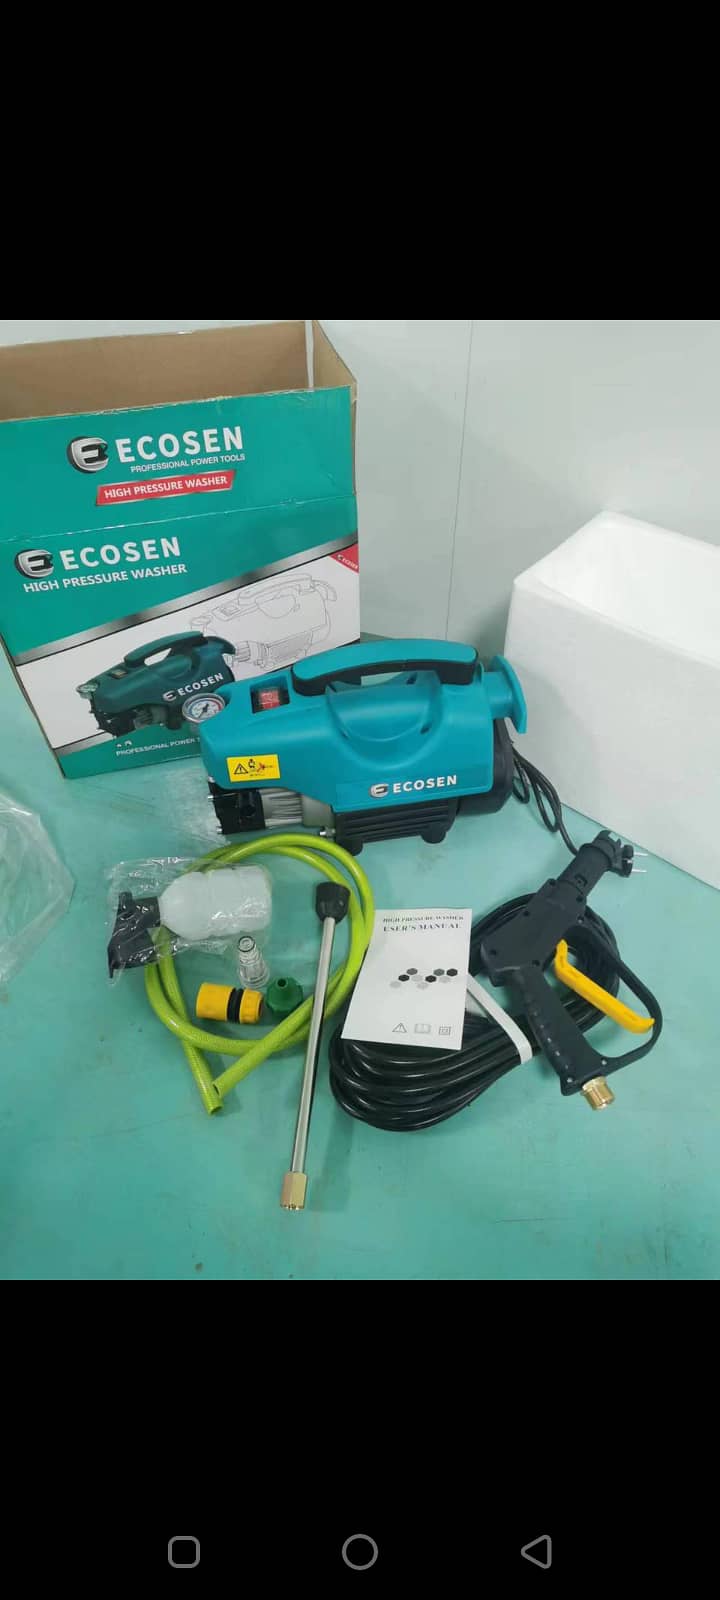 New) ECOSEN High Pressure Washer - 200 Bar 1